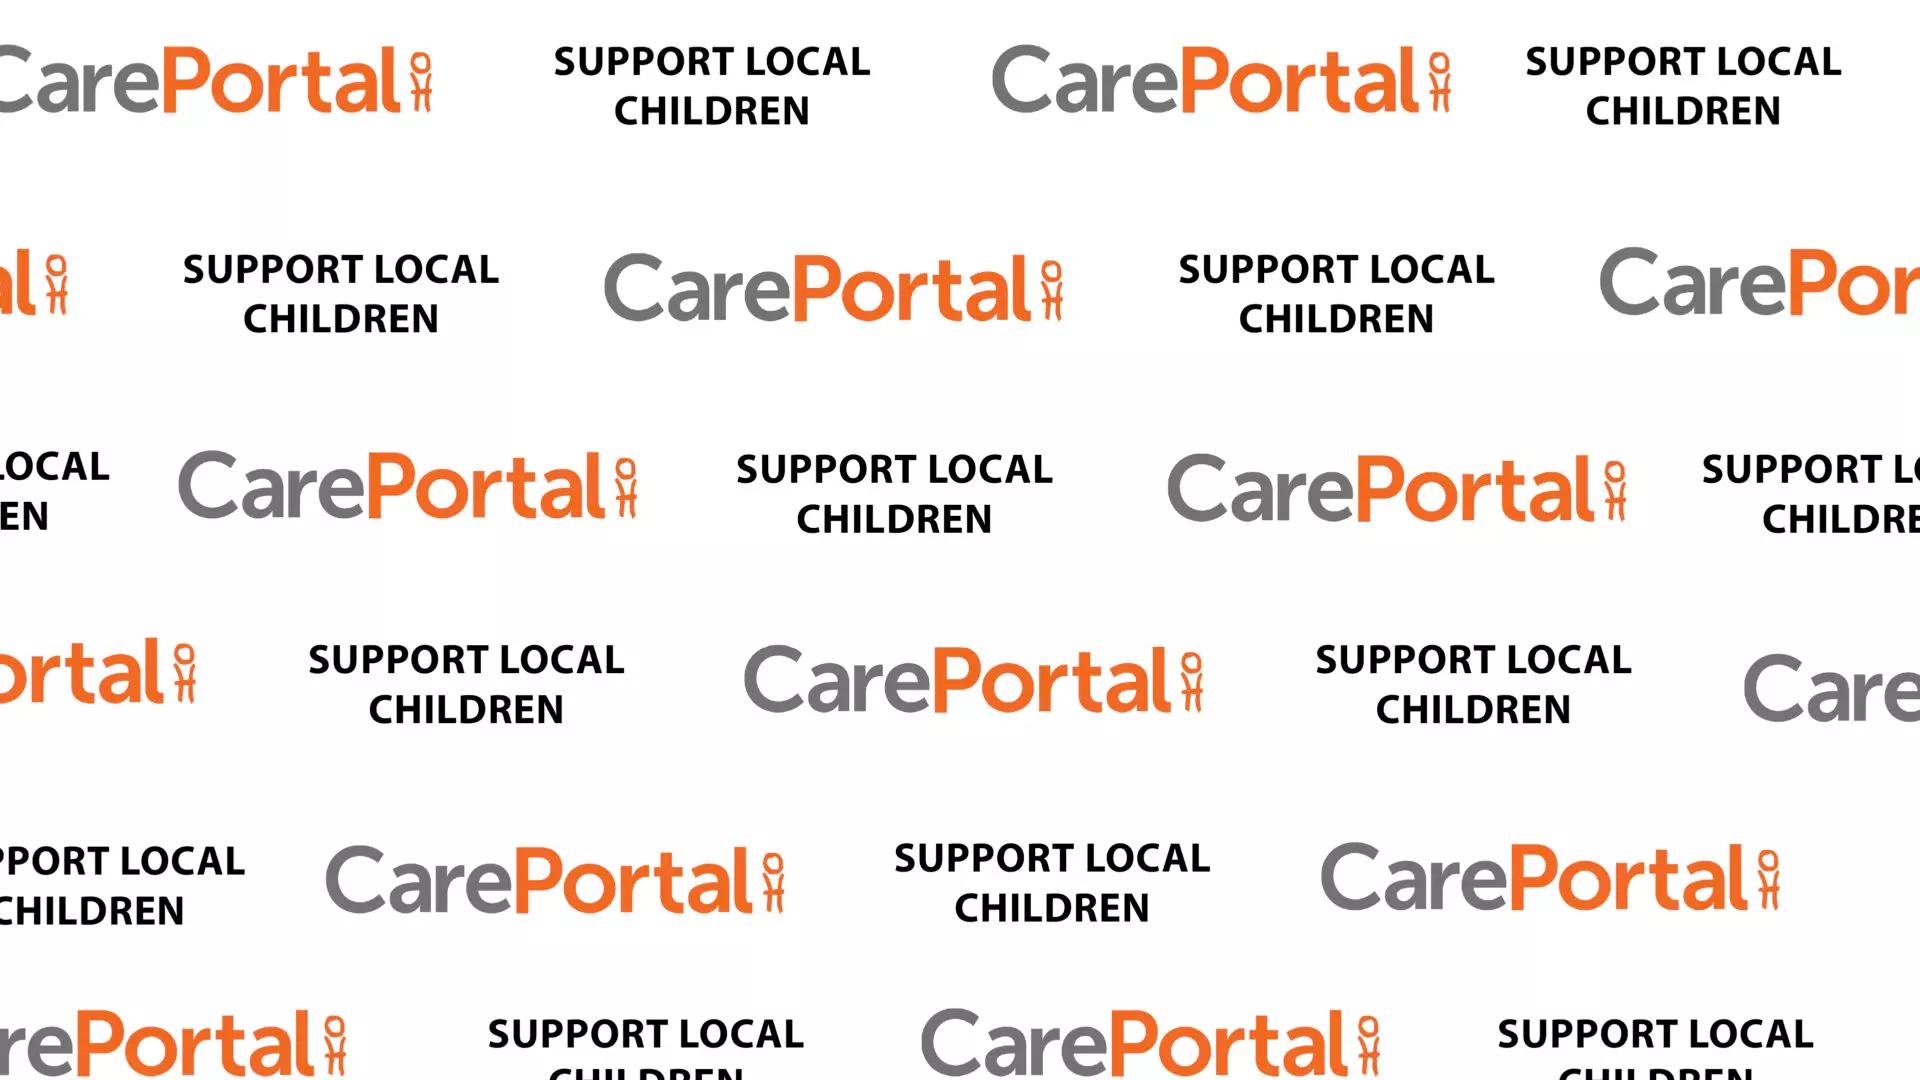 CarePortal Support Local Children